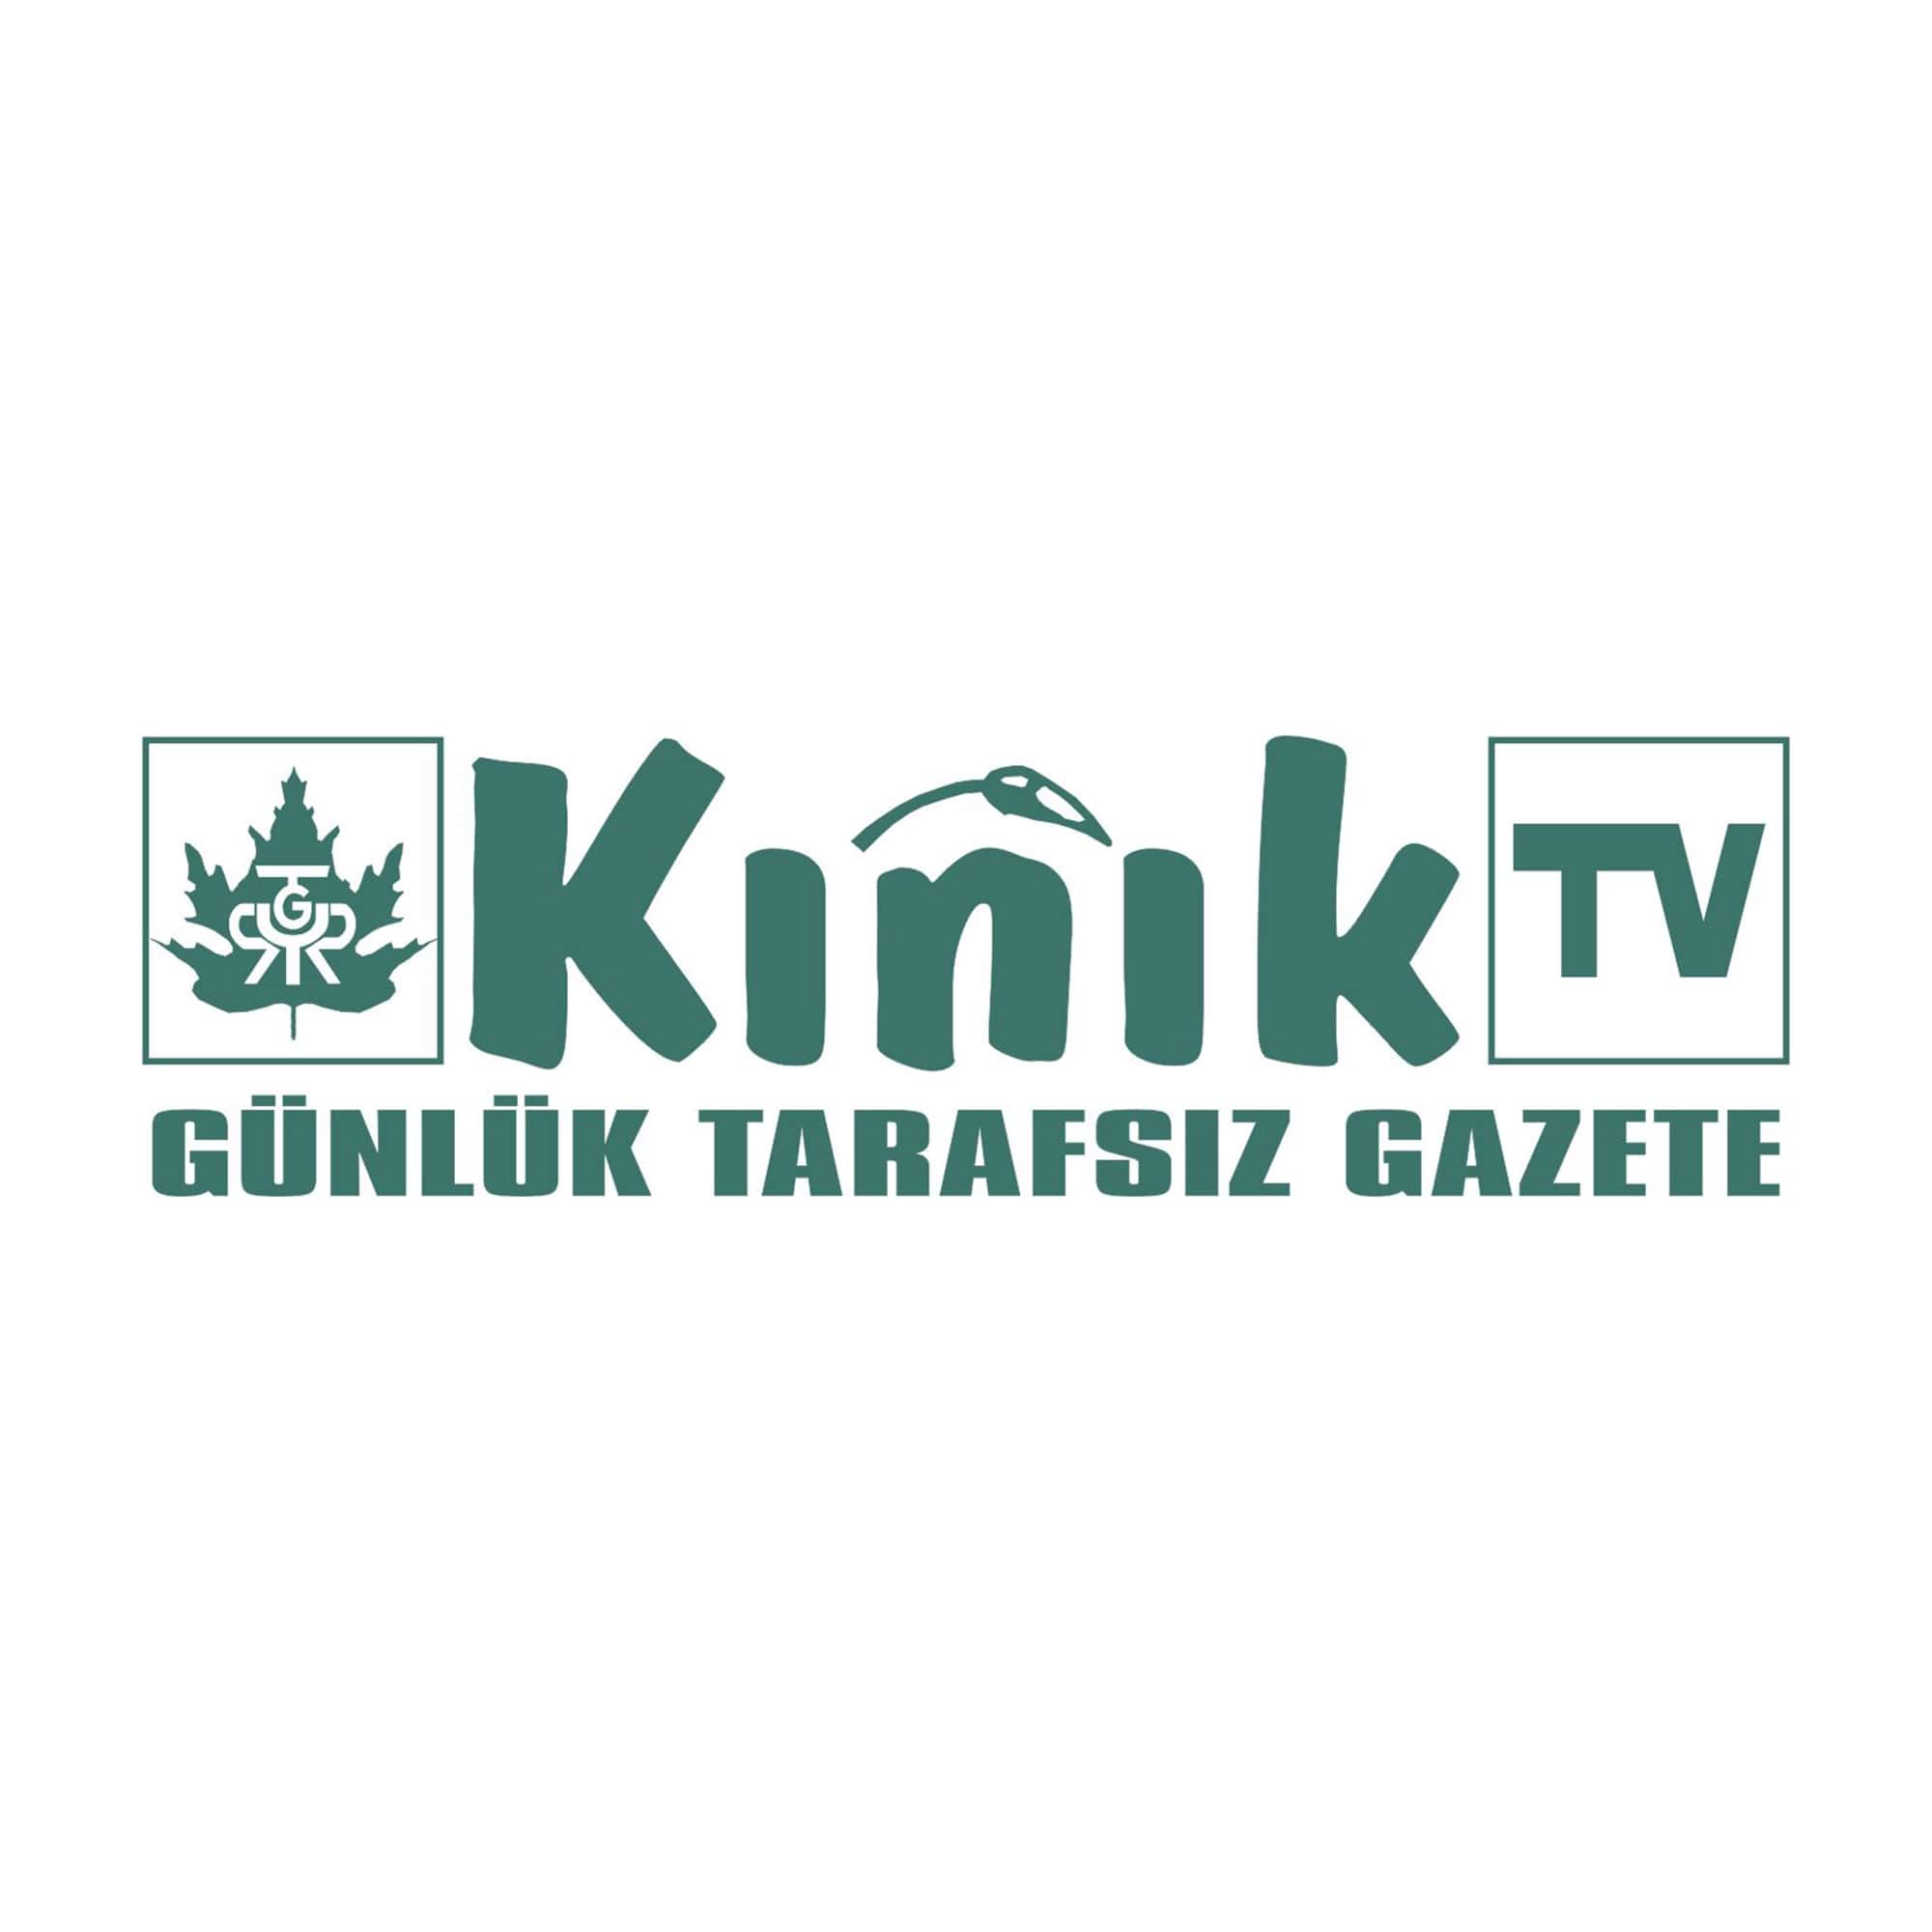 Knk Gazetesi - Yimta Matbaaclk Ltd. ti.